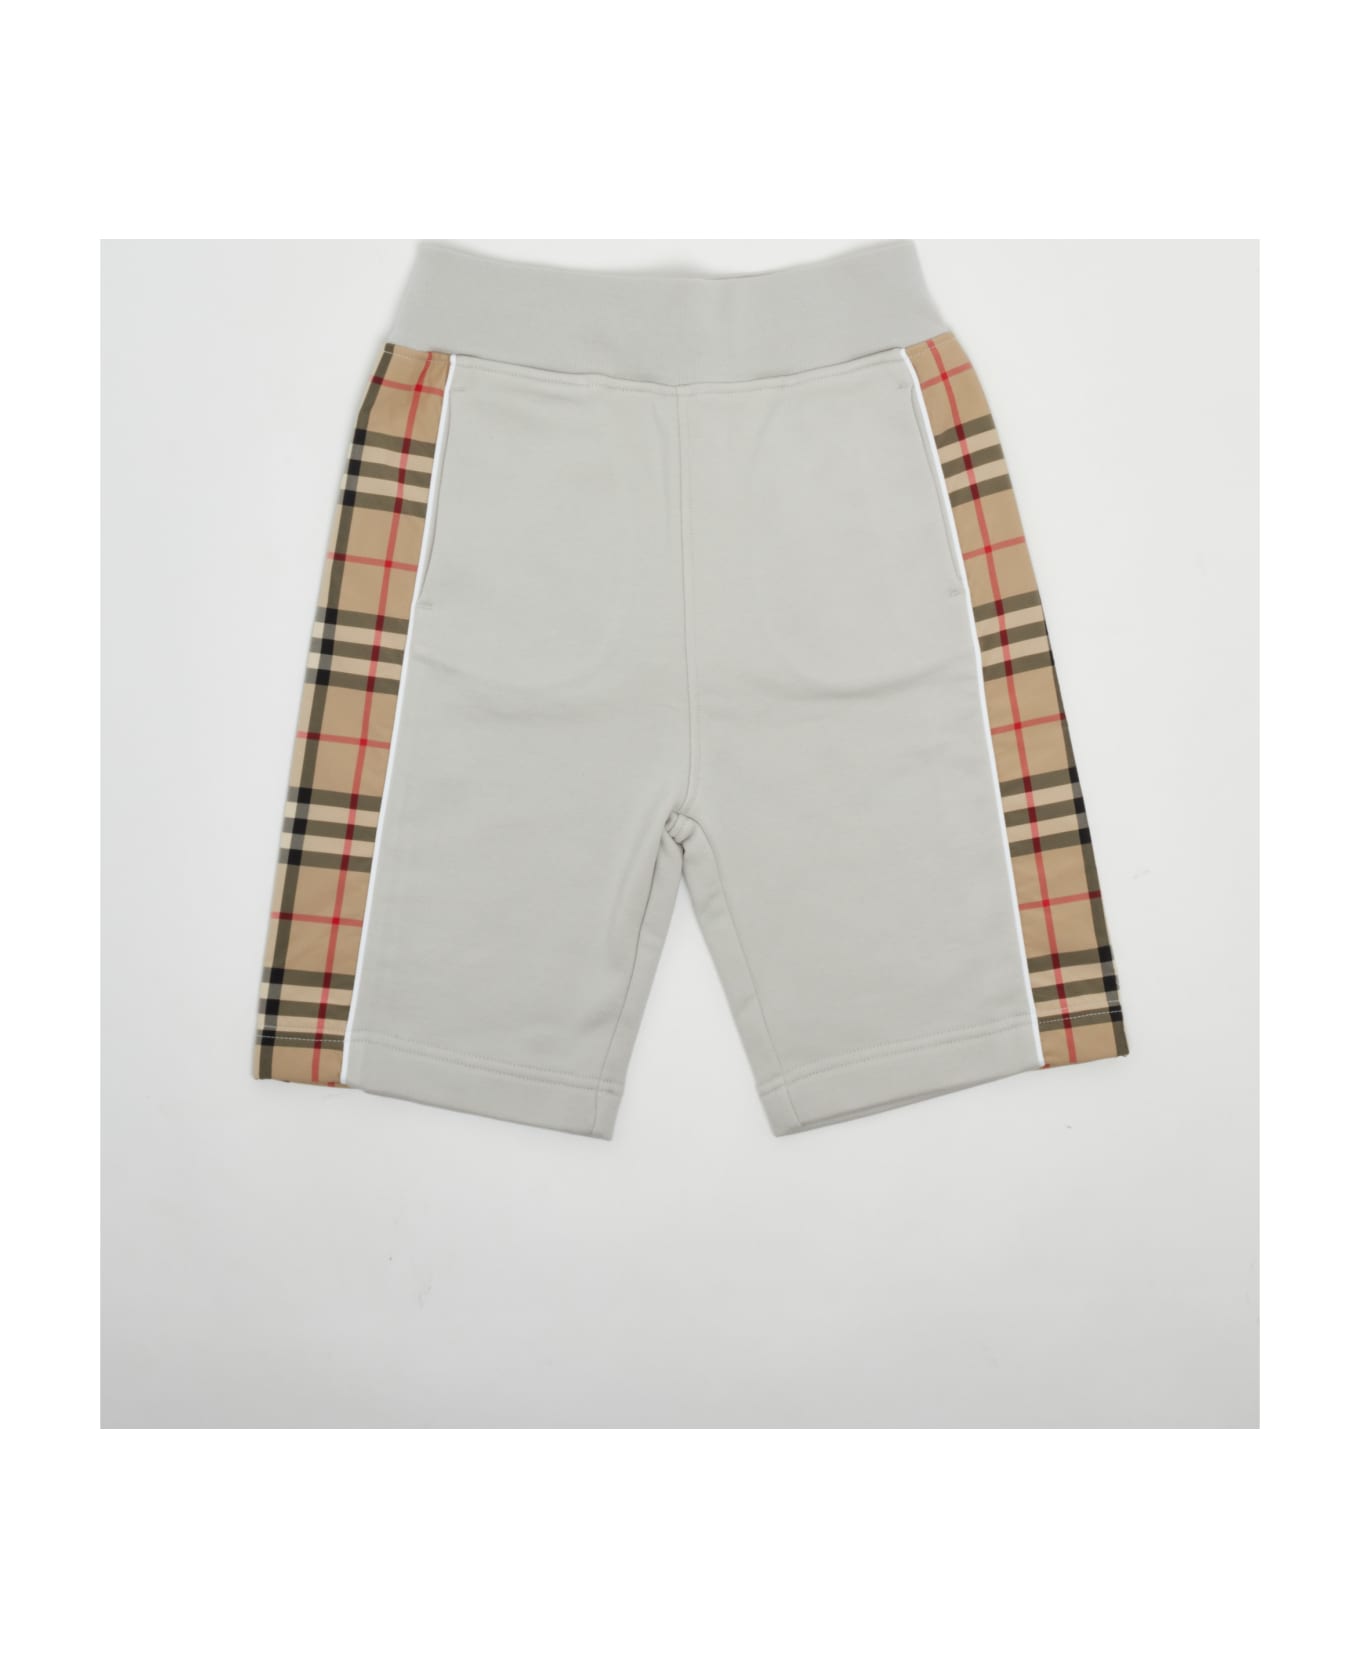 Burberry Shorts Sweatpants - GRIGIO CHIARO